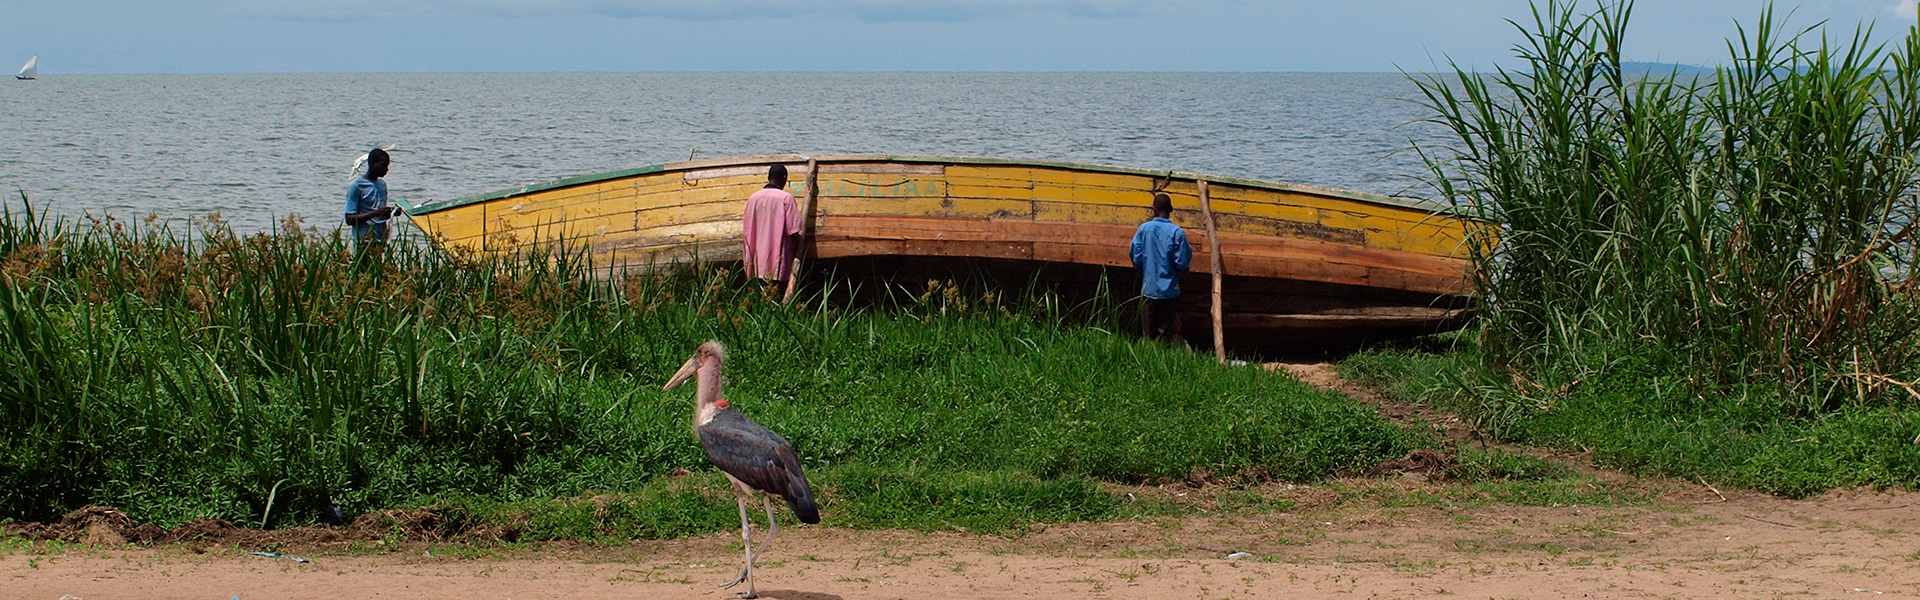 tanzania-fishery-beach-boat